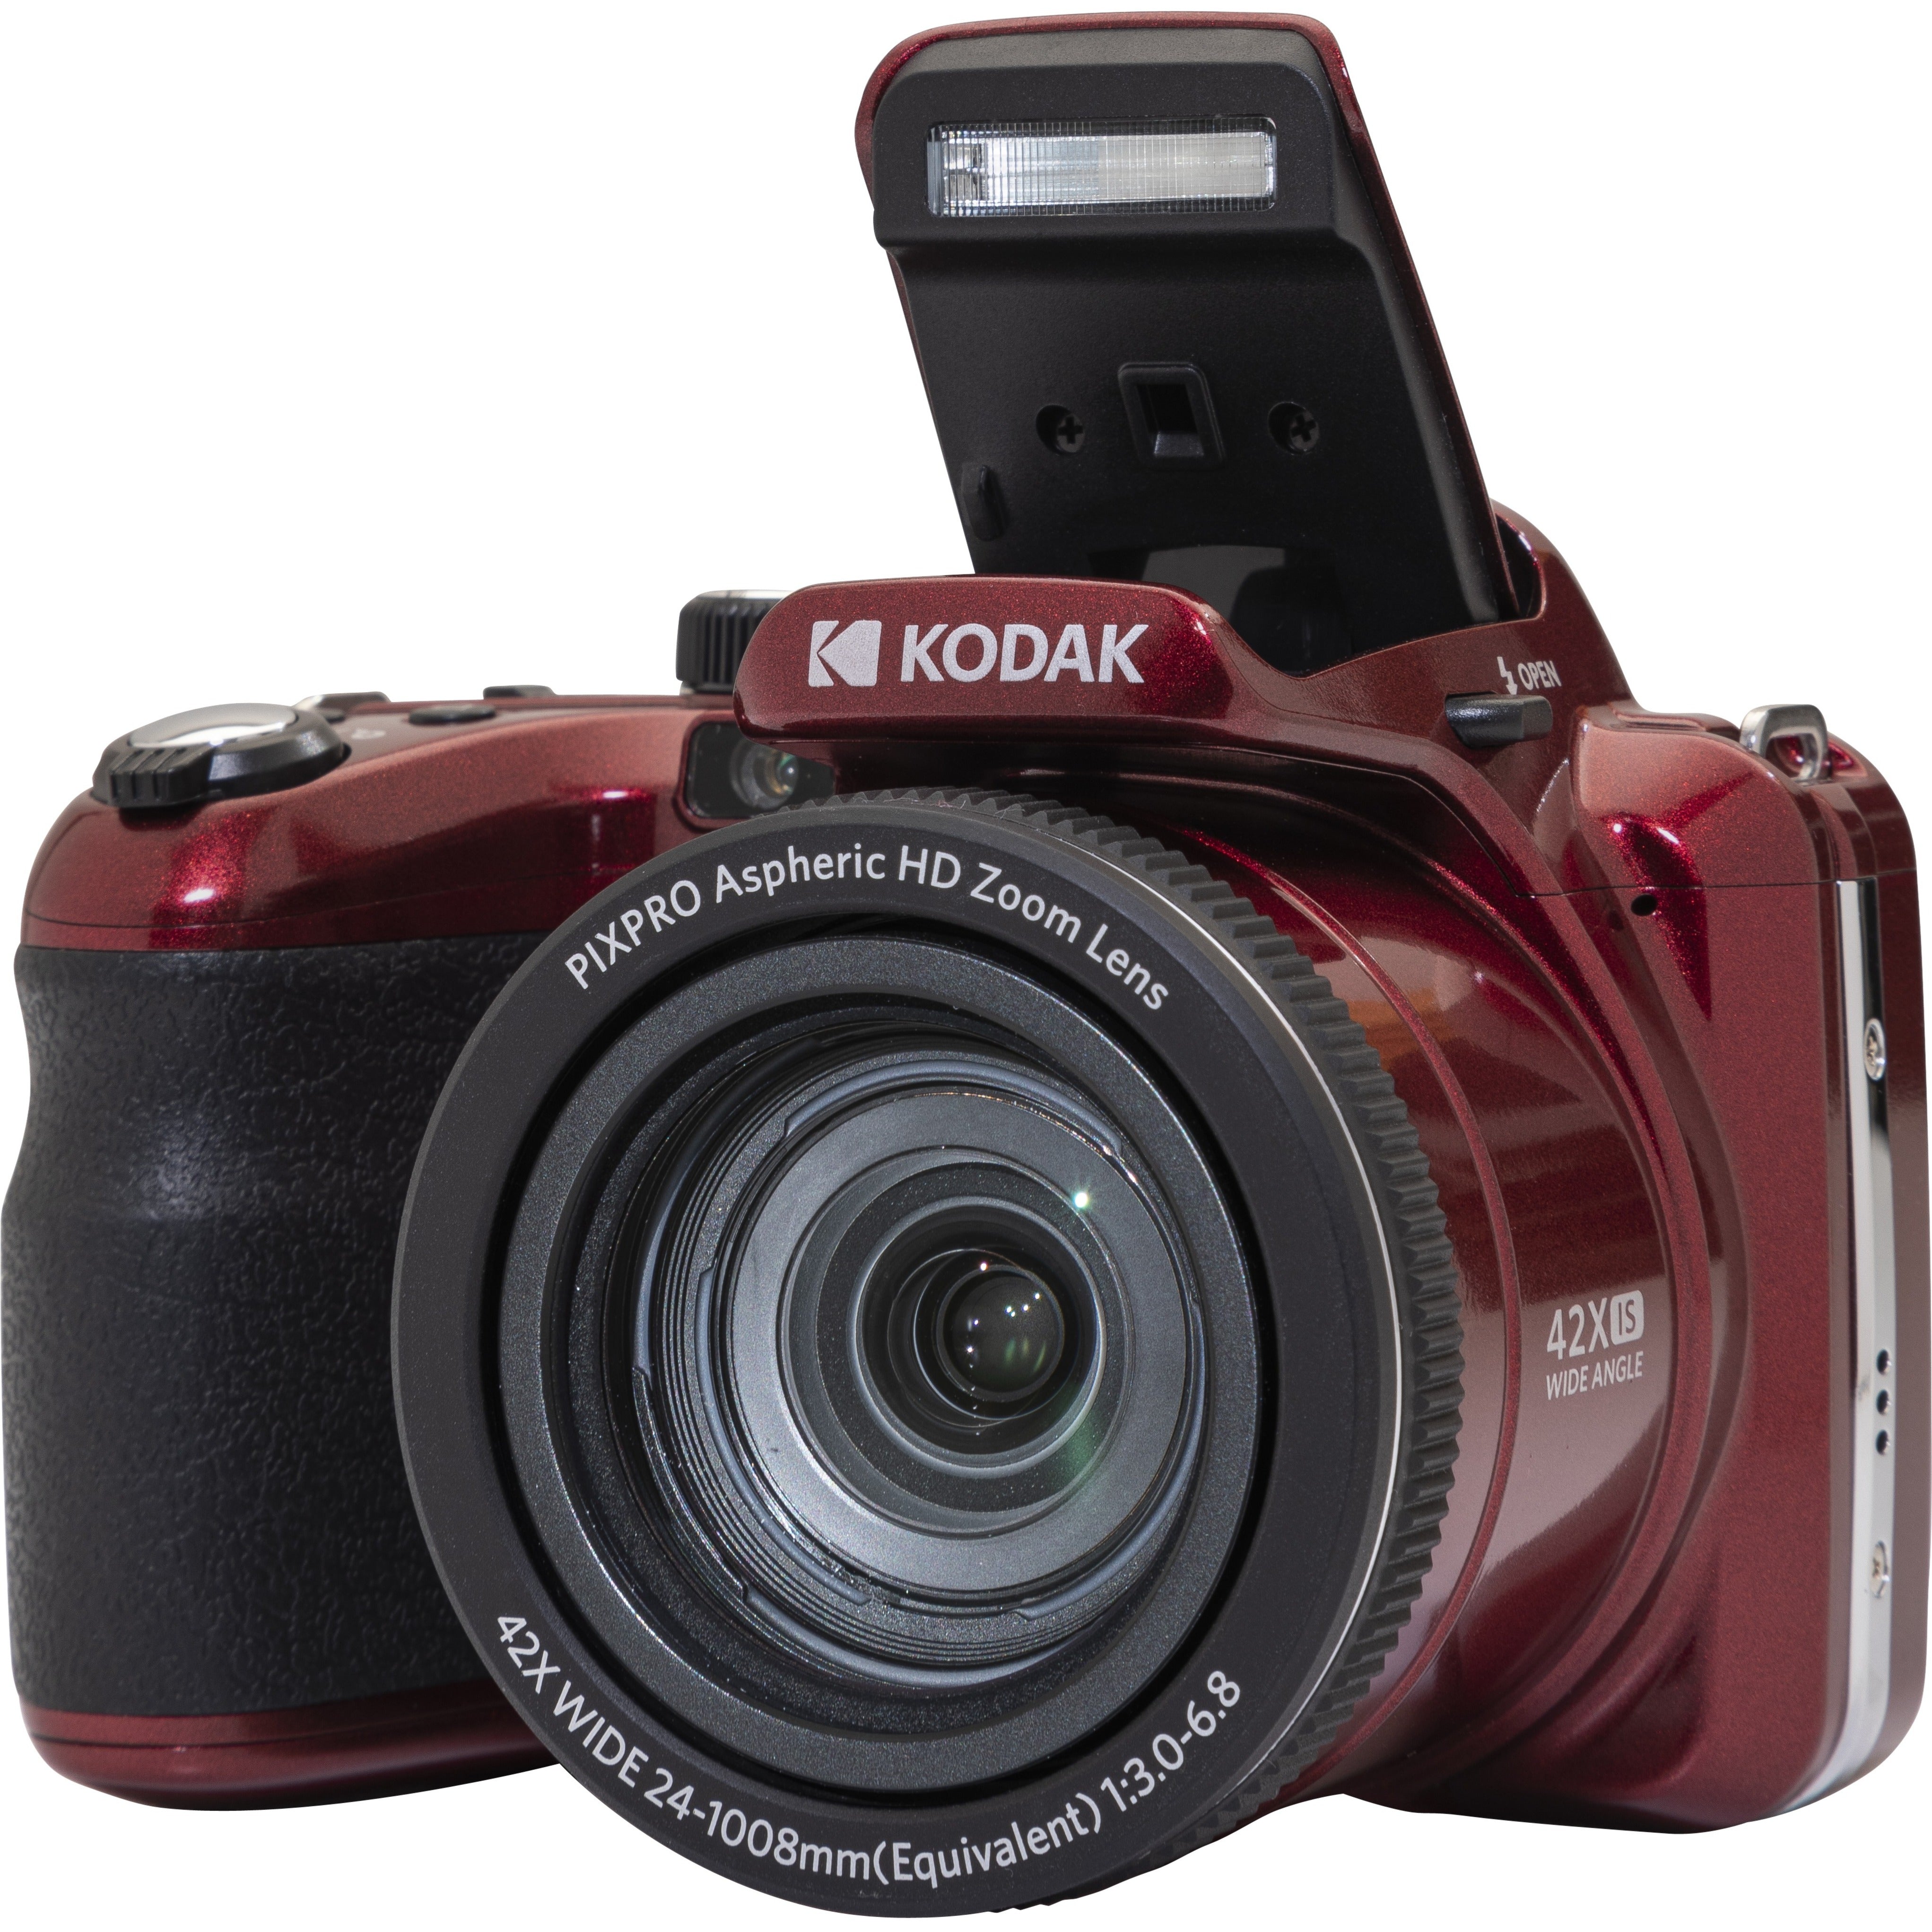 Kodak AZ425-RD PIXPRO Astro Zoom Bridge Camera, 20.7MP, 42x Optical Zoom, Full HD Video